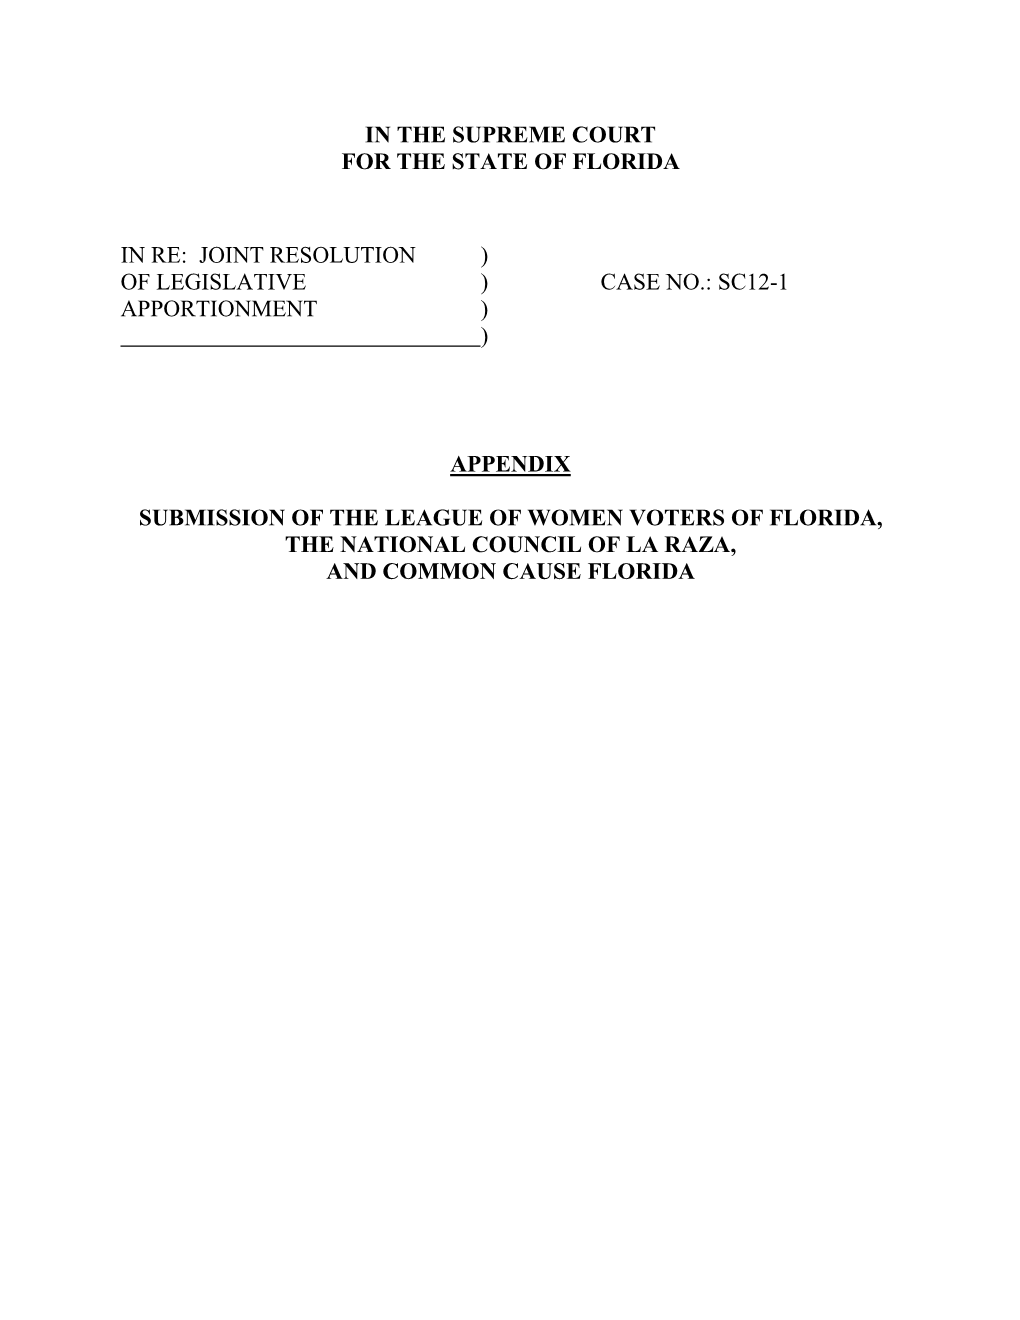 Joint Resolution ) of Legislative ) Case No.: Sc12-1 Apportionment ) )